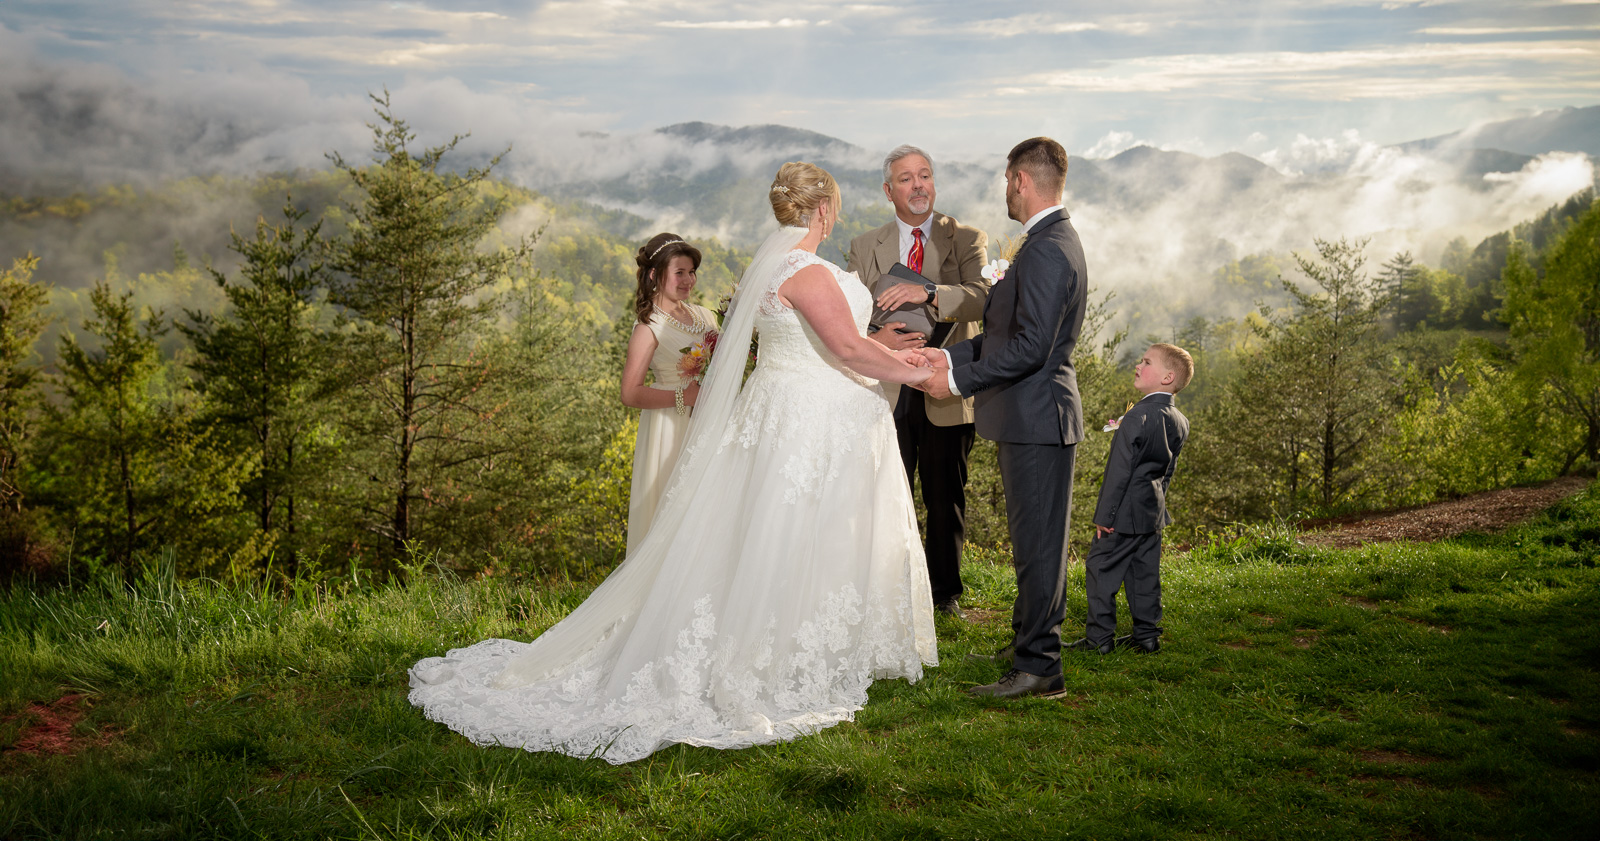 Foothills Parkway overlook wedding and elopement packages